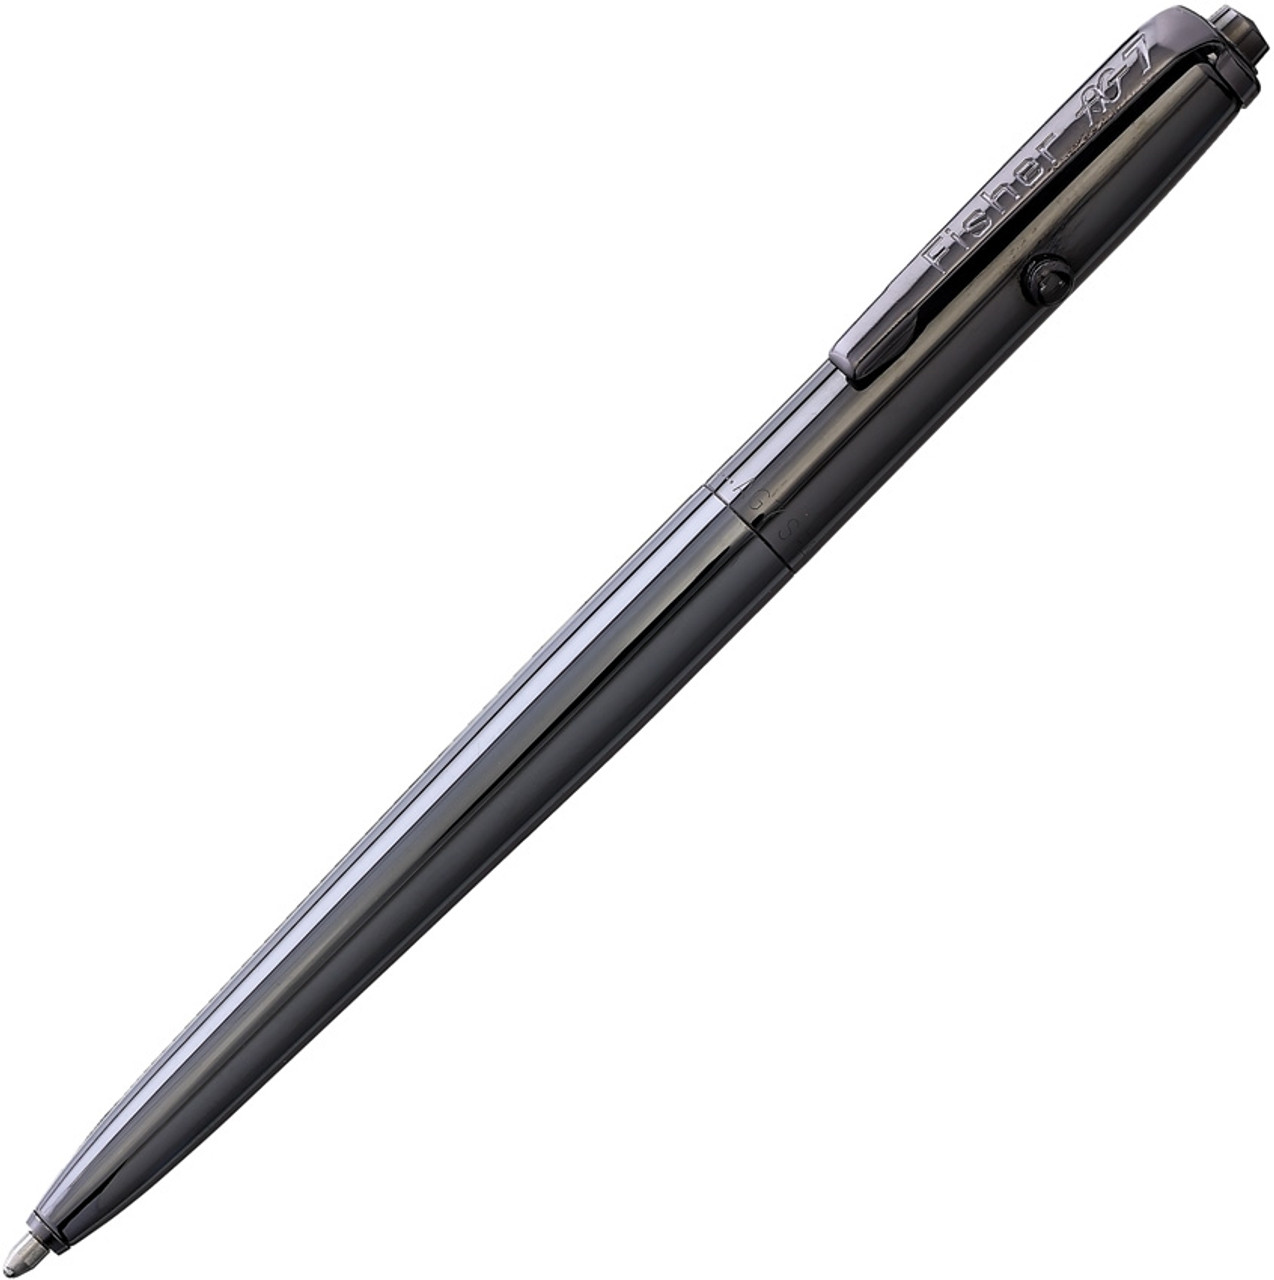 Original Astronaut Space Pen - Fisher Space Pen